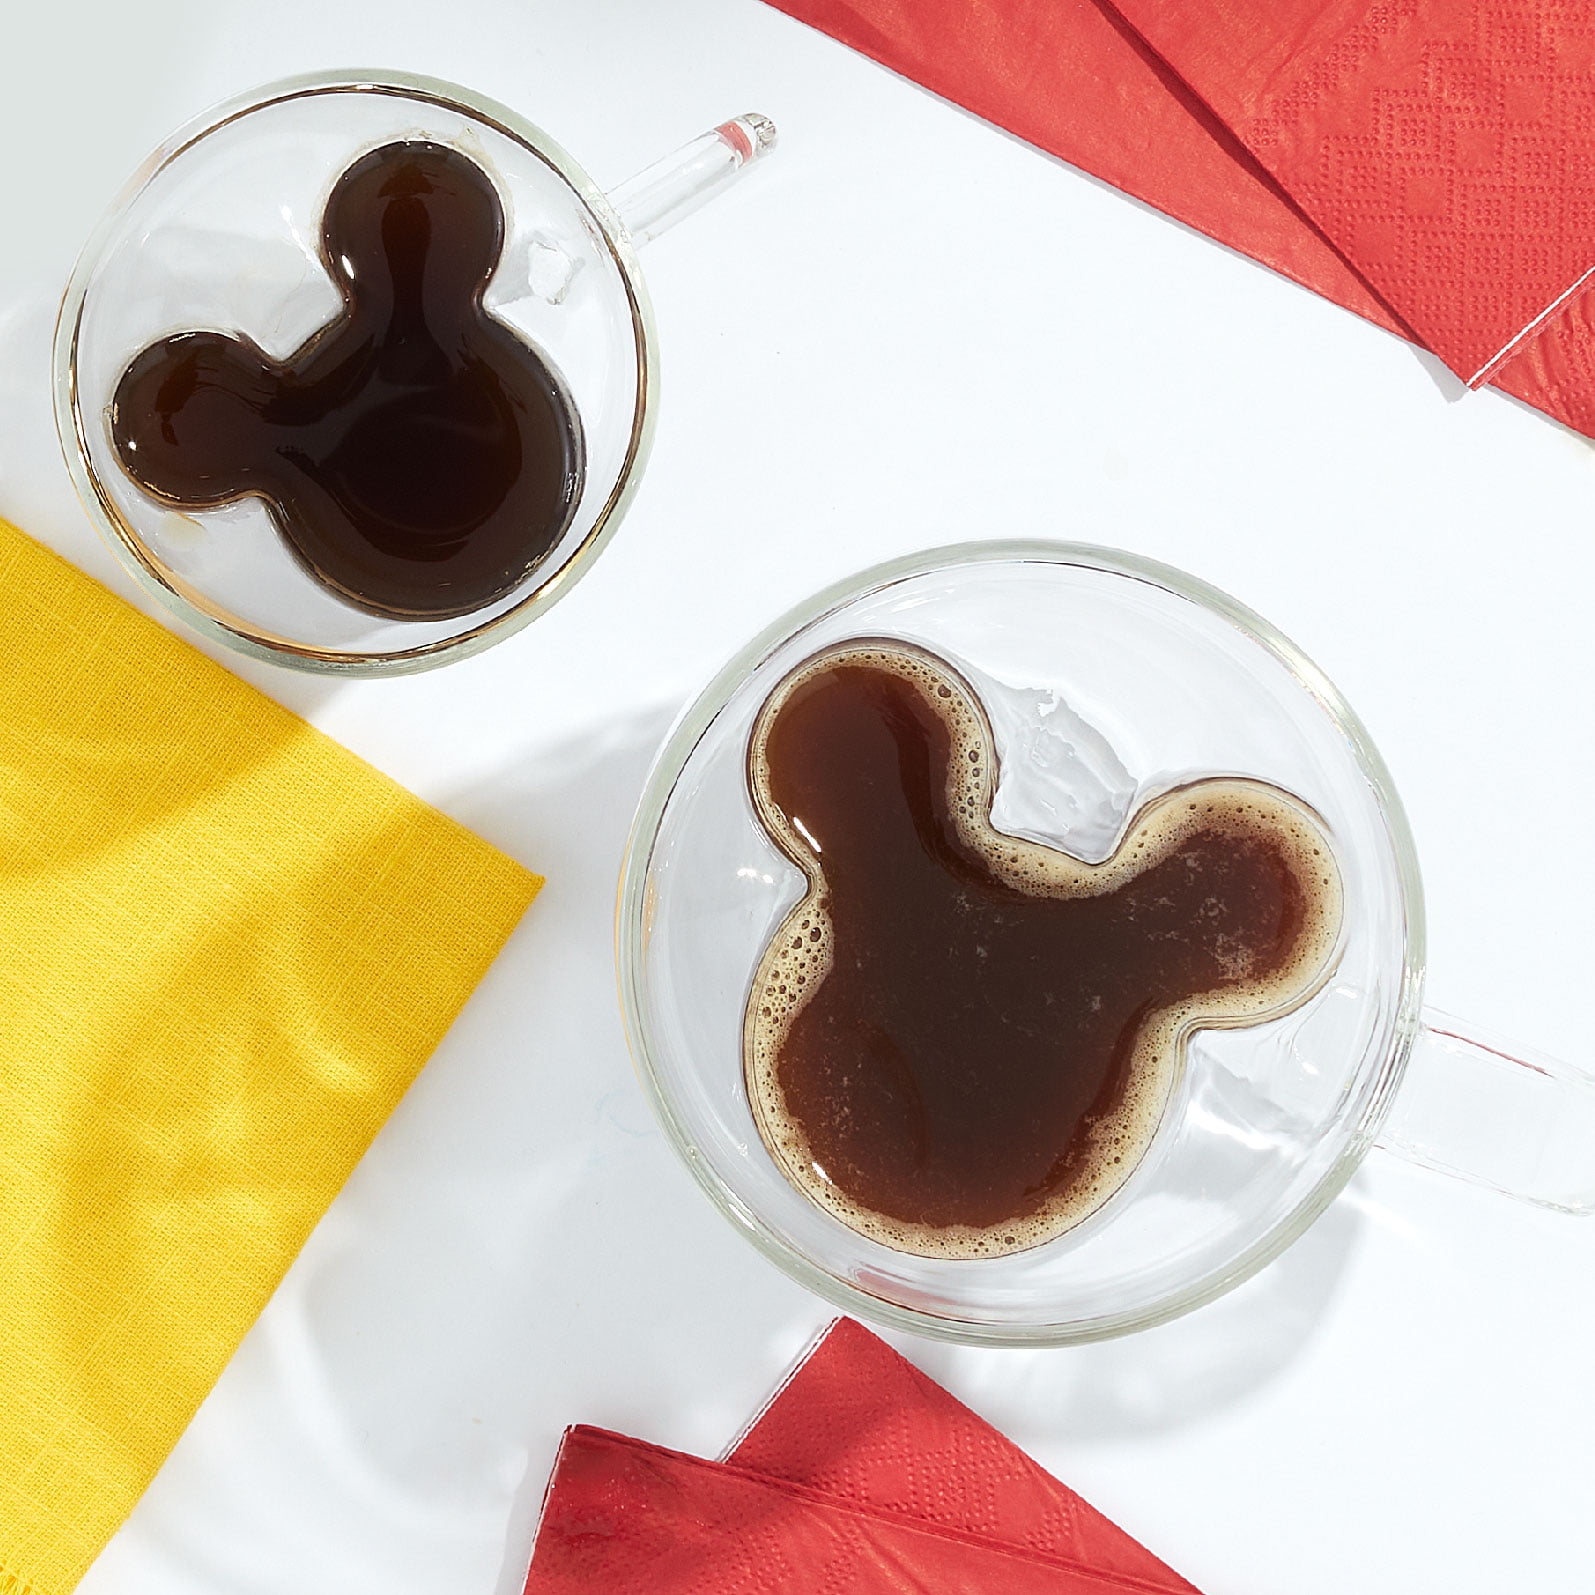 JoyJolt Disney Mickey and Pluto Glass Coffee Mugs - Set of 2 - 13.5 oz -  Bed Bath & Beyond - 34526222